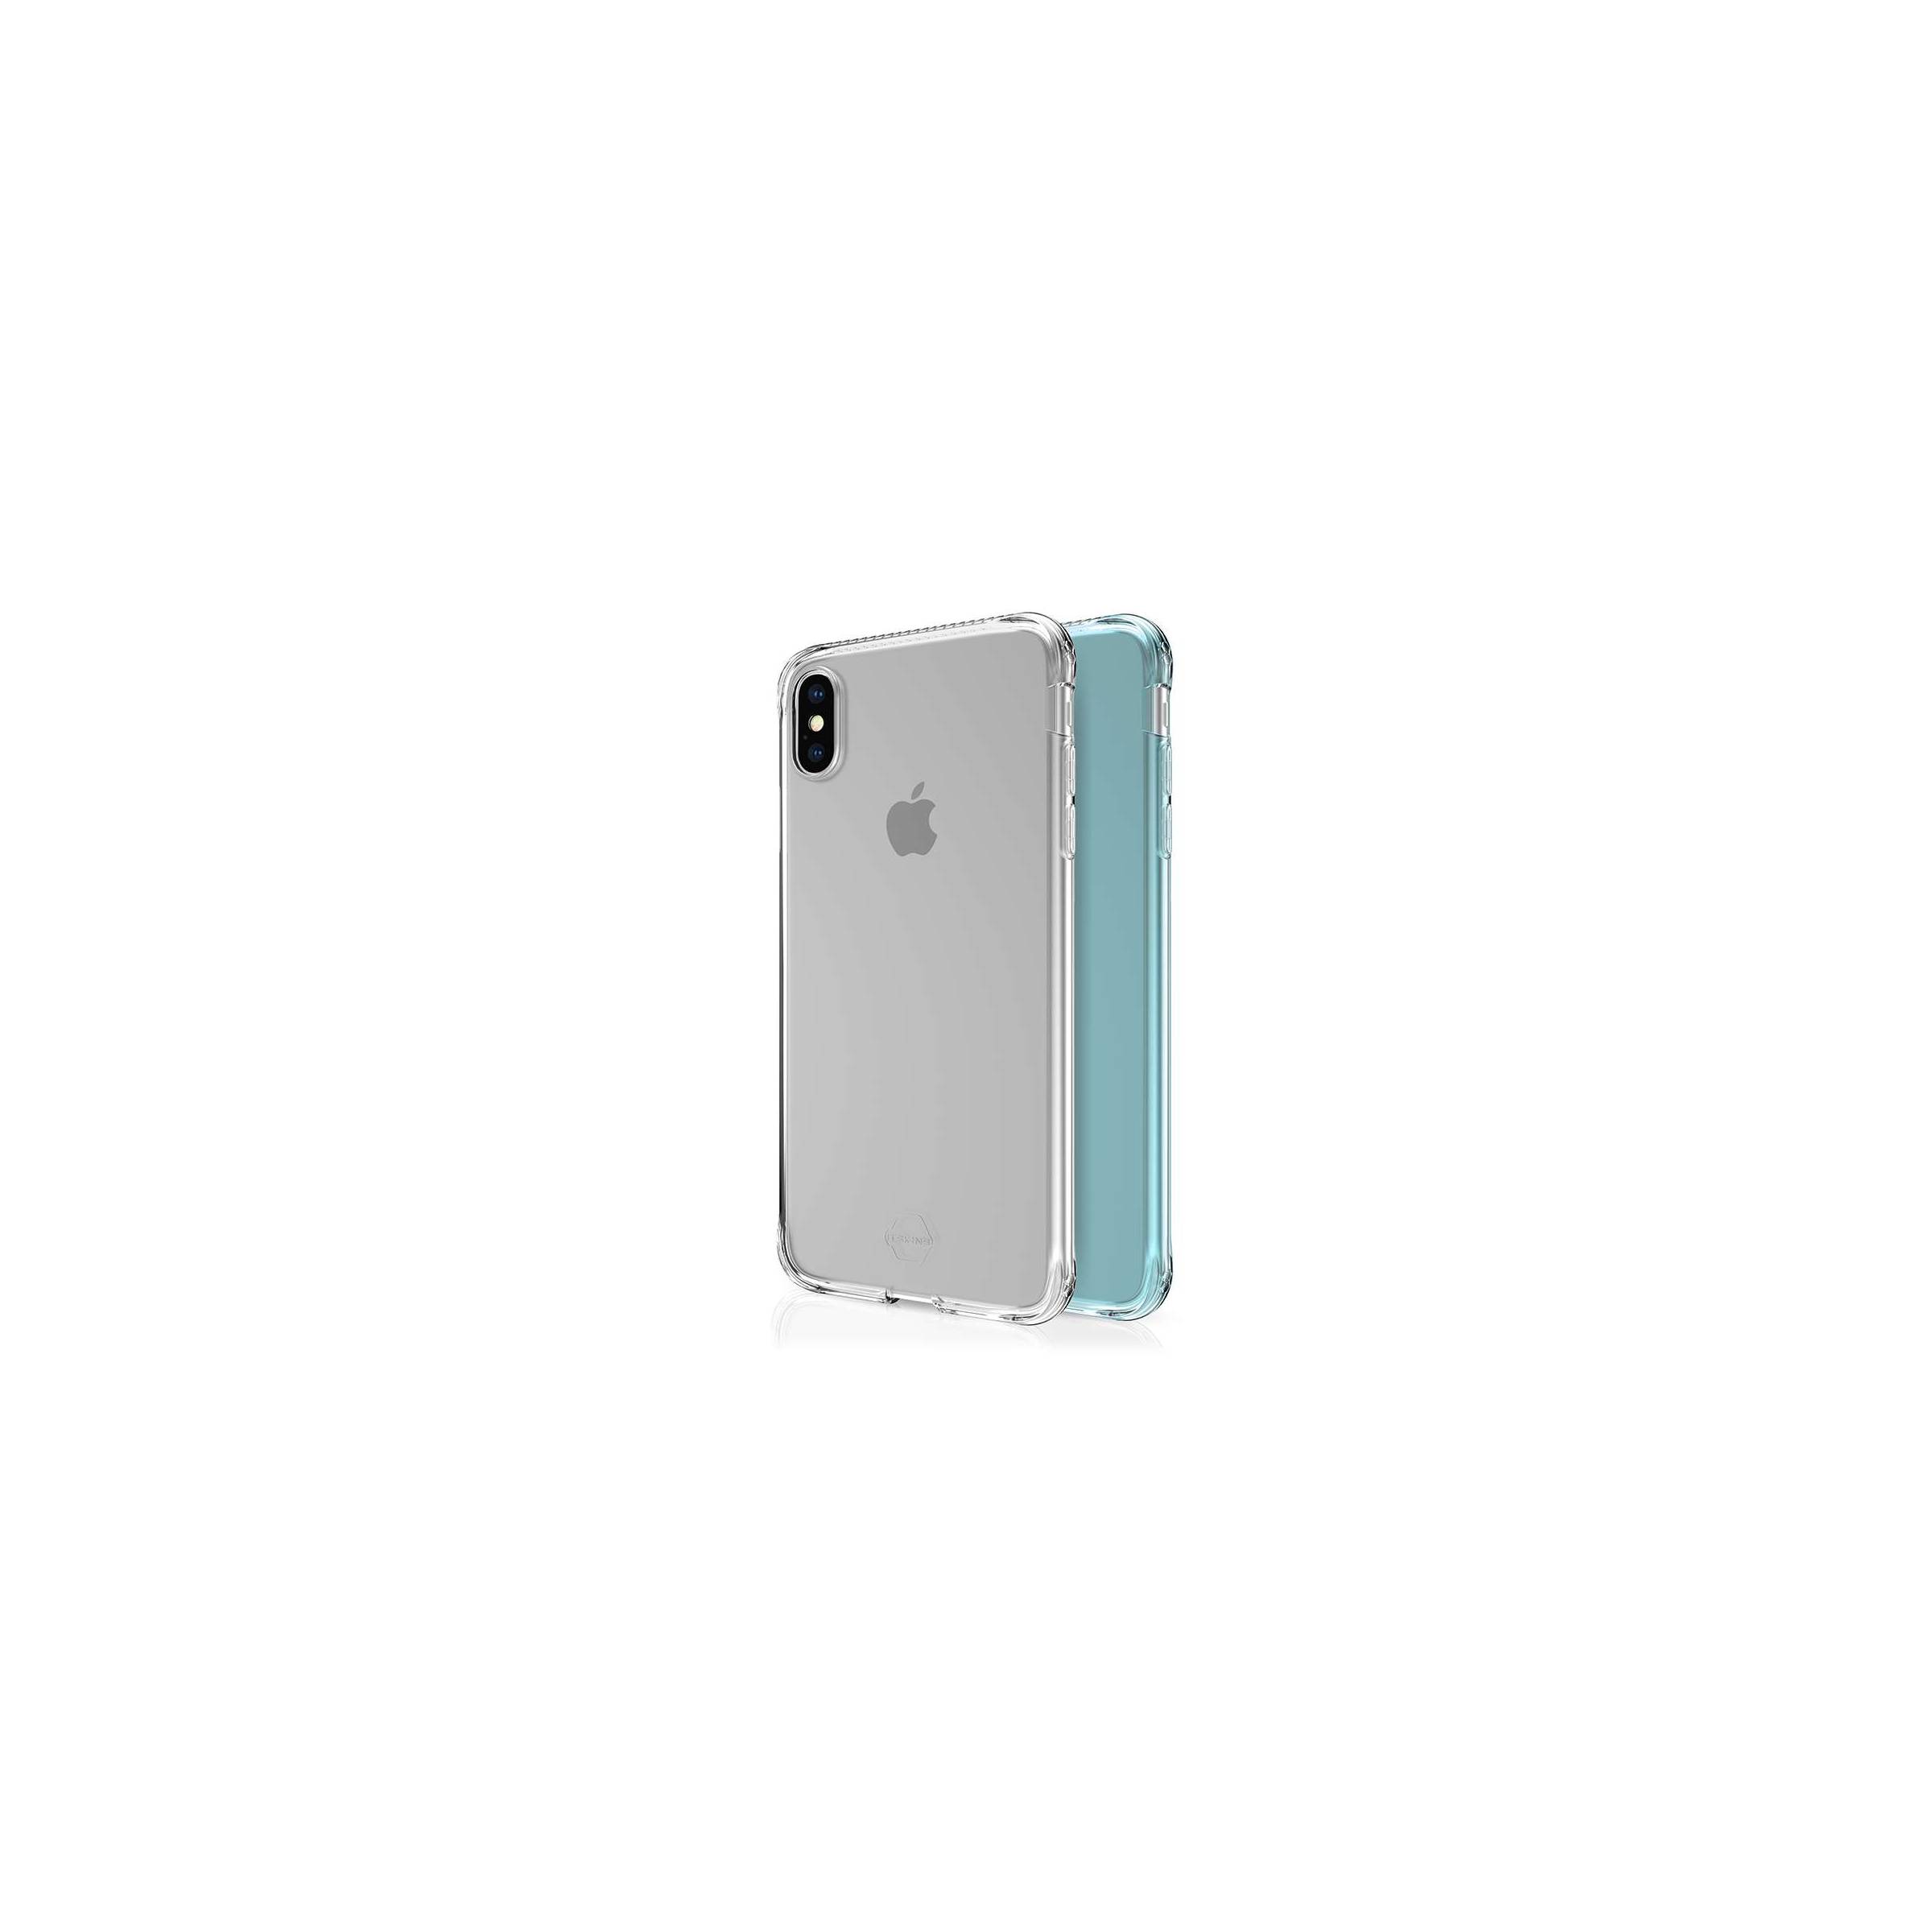 Bilde av Itskins Slim Silikon Protect Gel Iphone Xs Max Deksel Dobbel 2x Pakke, Farge Klar Og Grøn